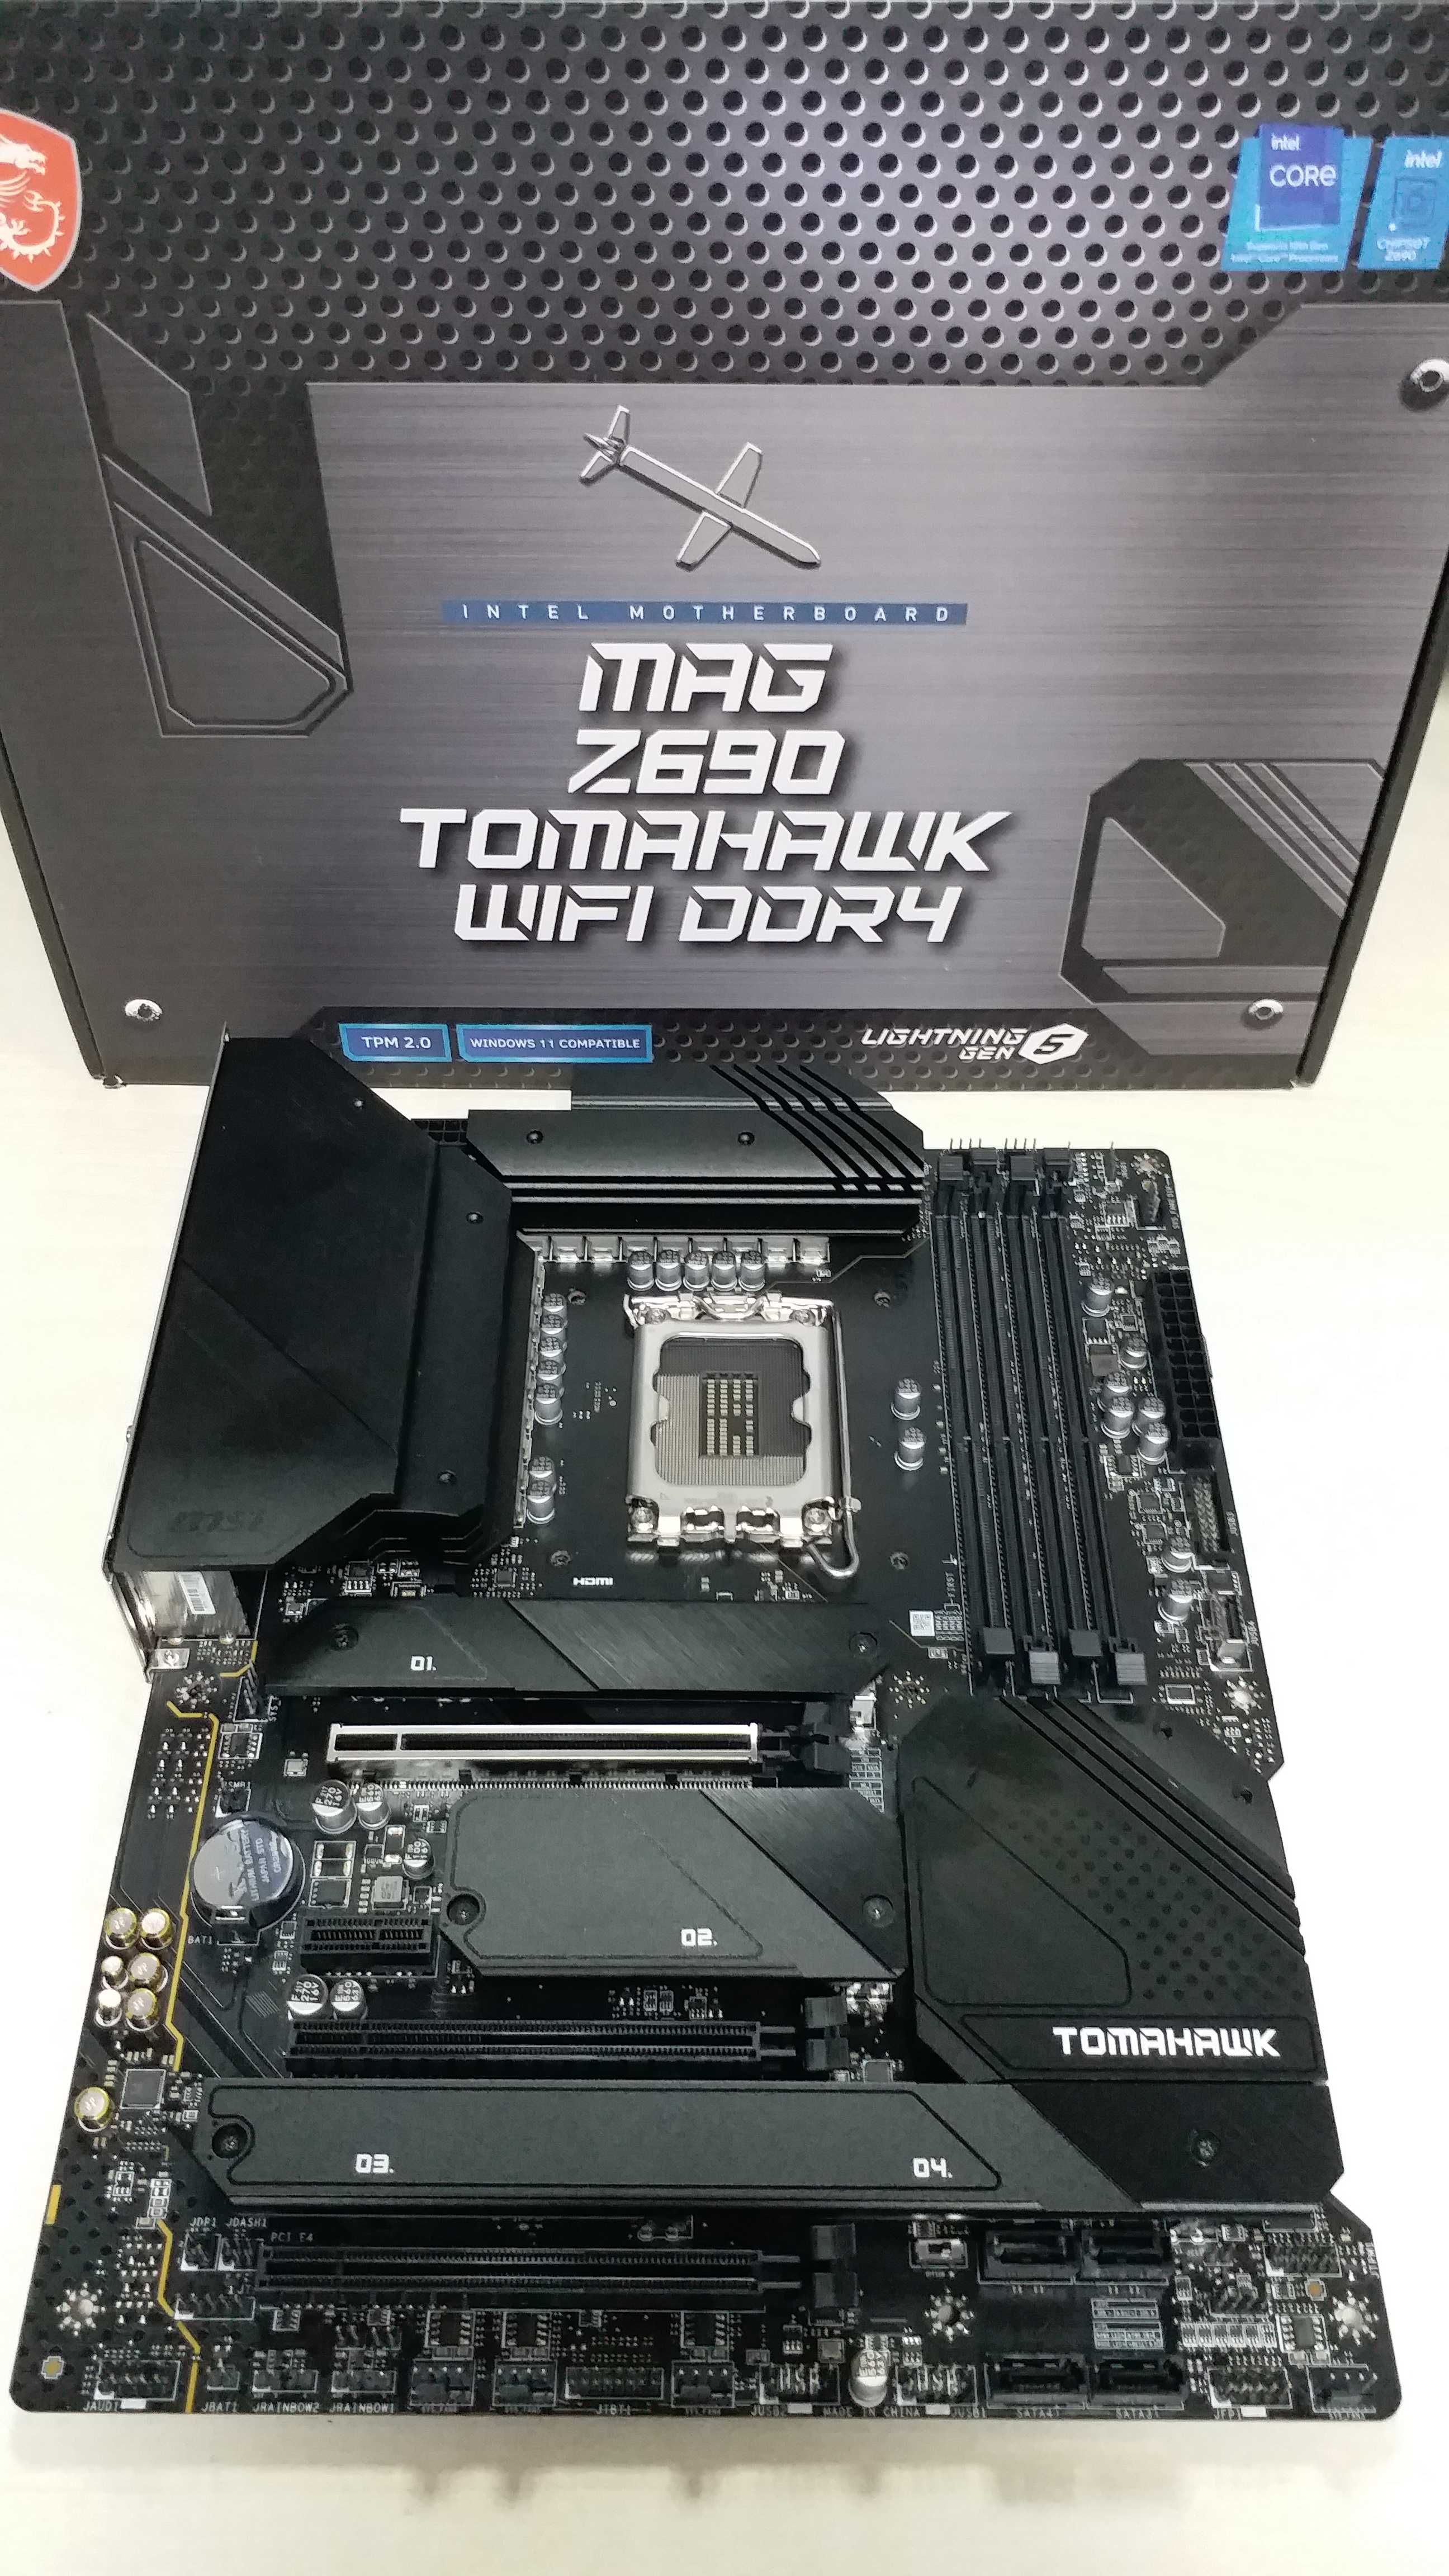 Топ плата MSI MAG Z690 Tomahawk WiFi DDR4 Сокет 1700